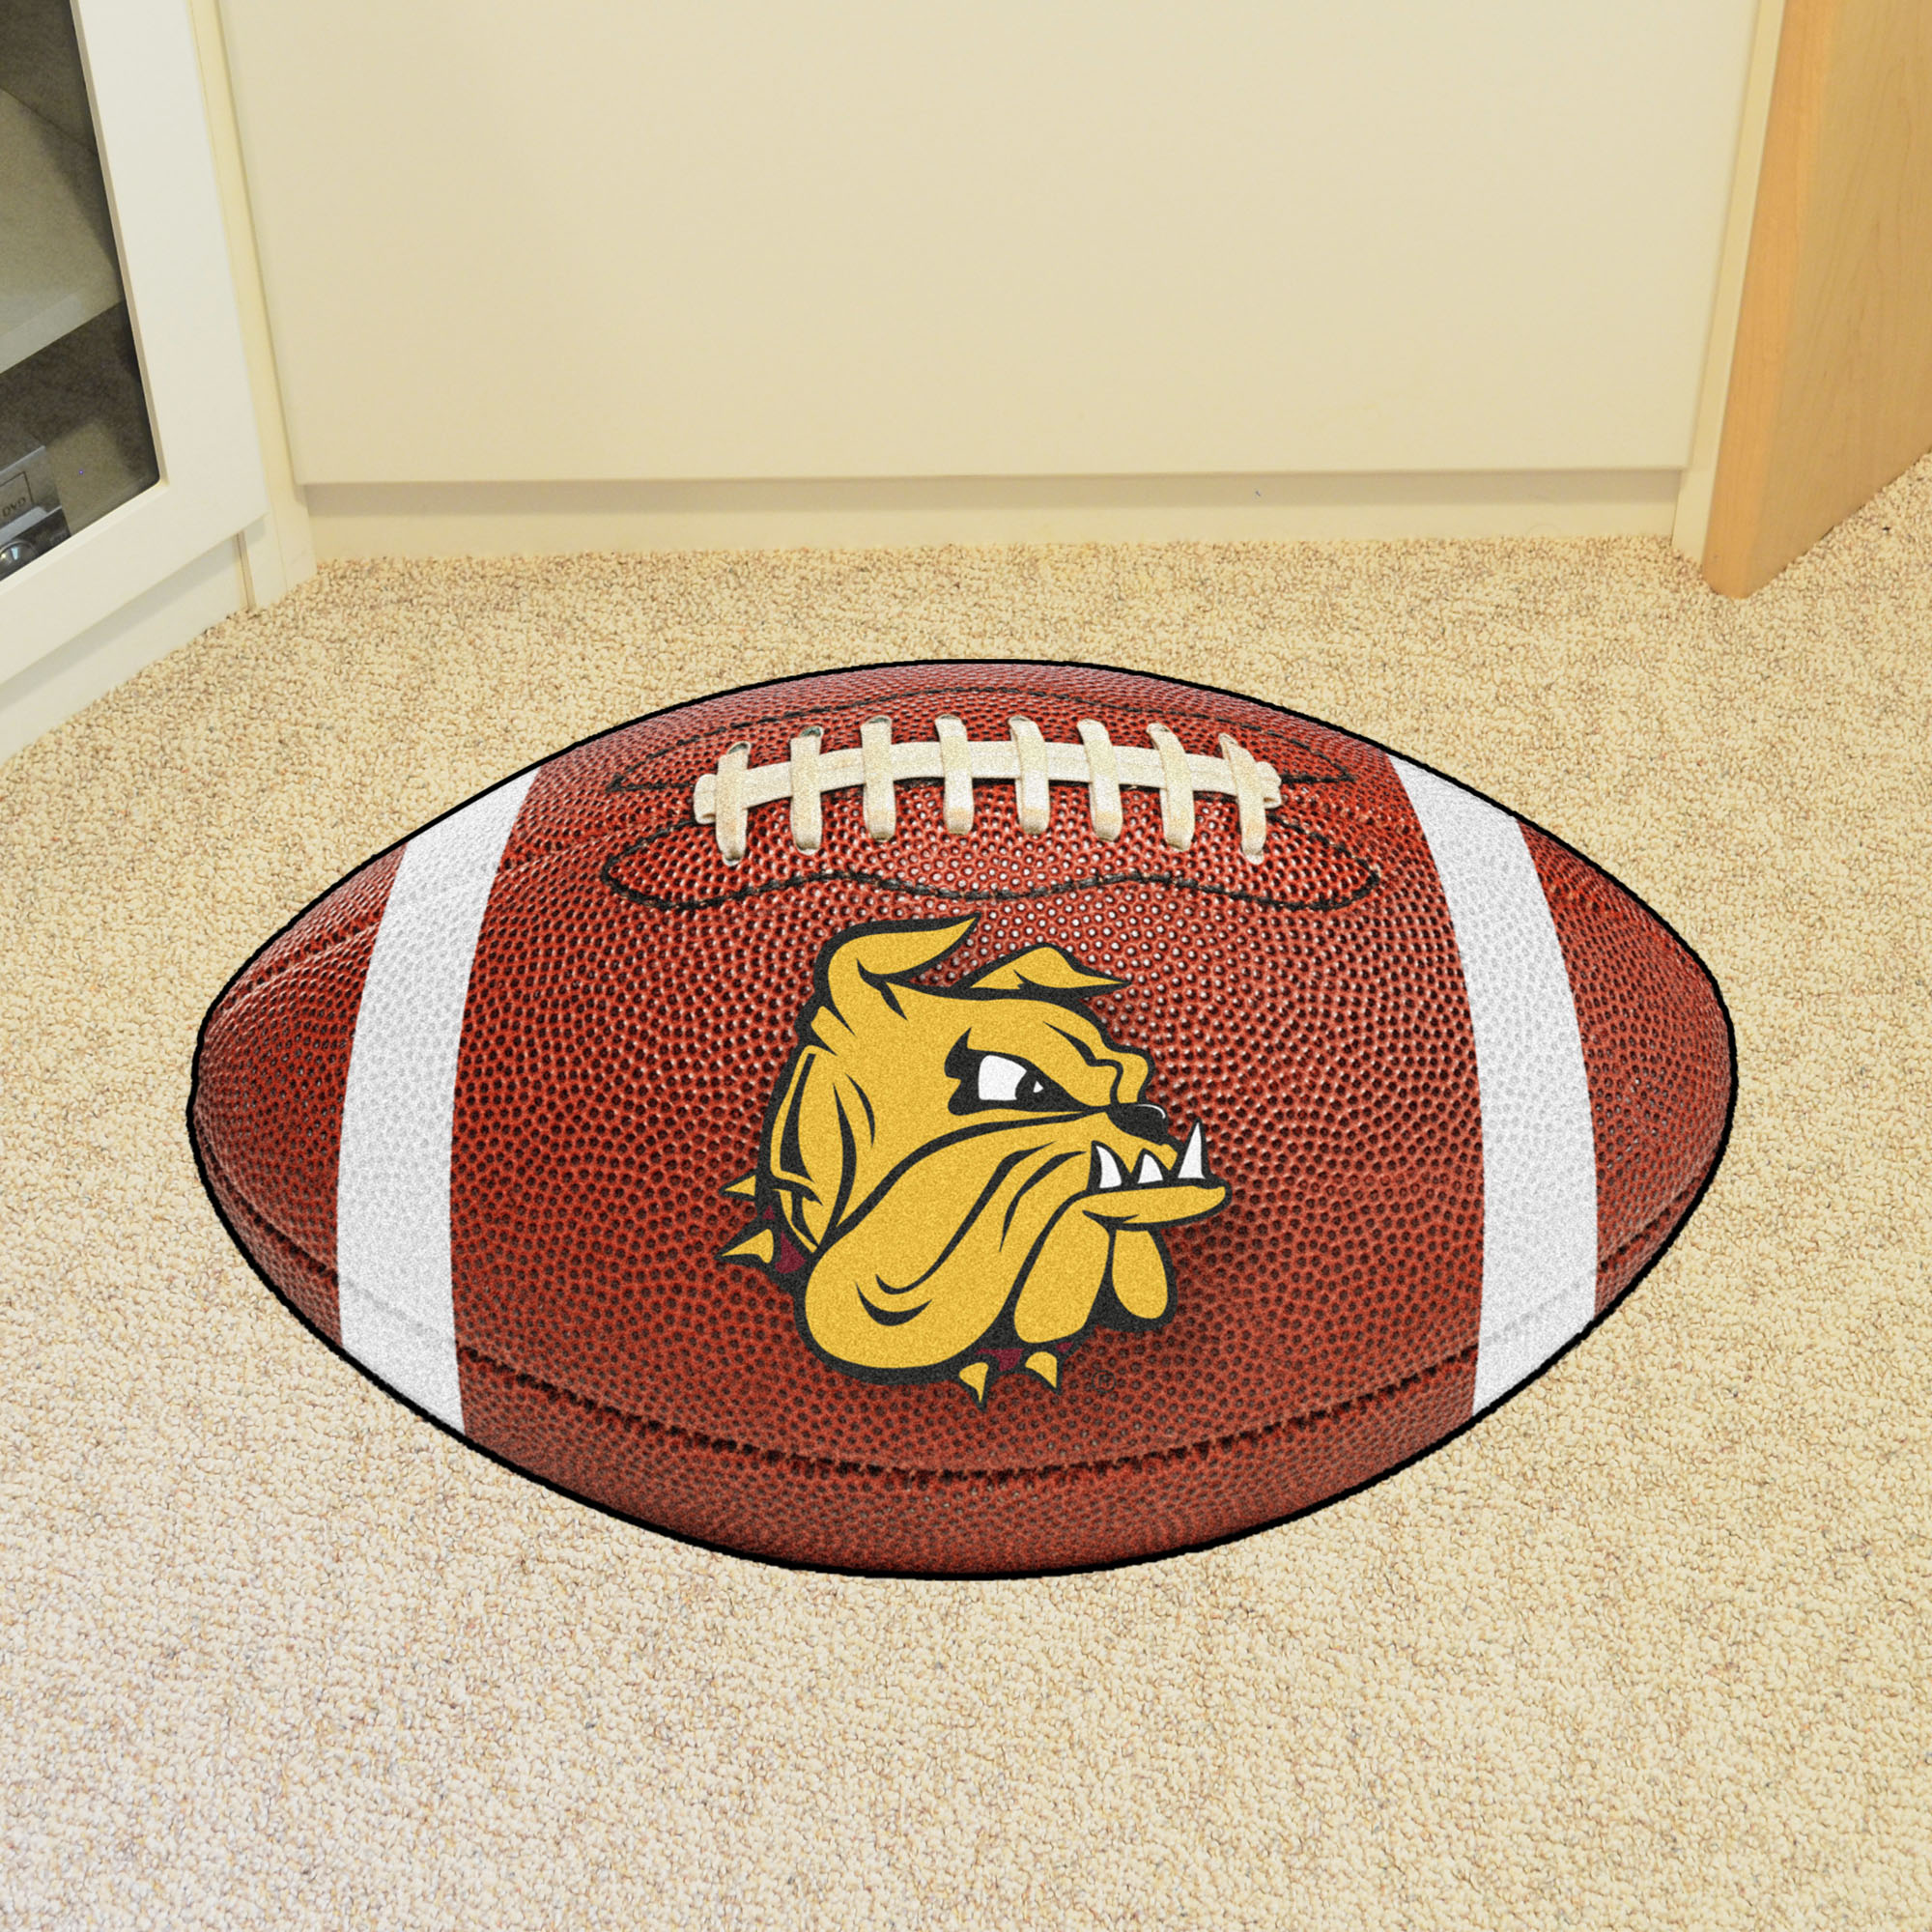 University of Duluth Duluth Ball Shaped Area Rugs (Ball Shaped Area Rugs: Football)